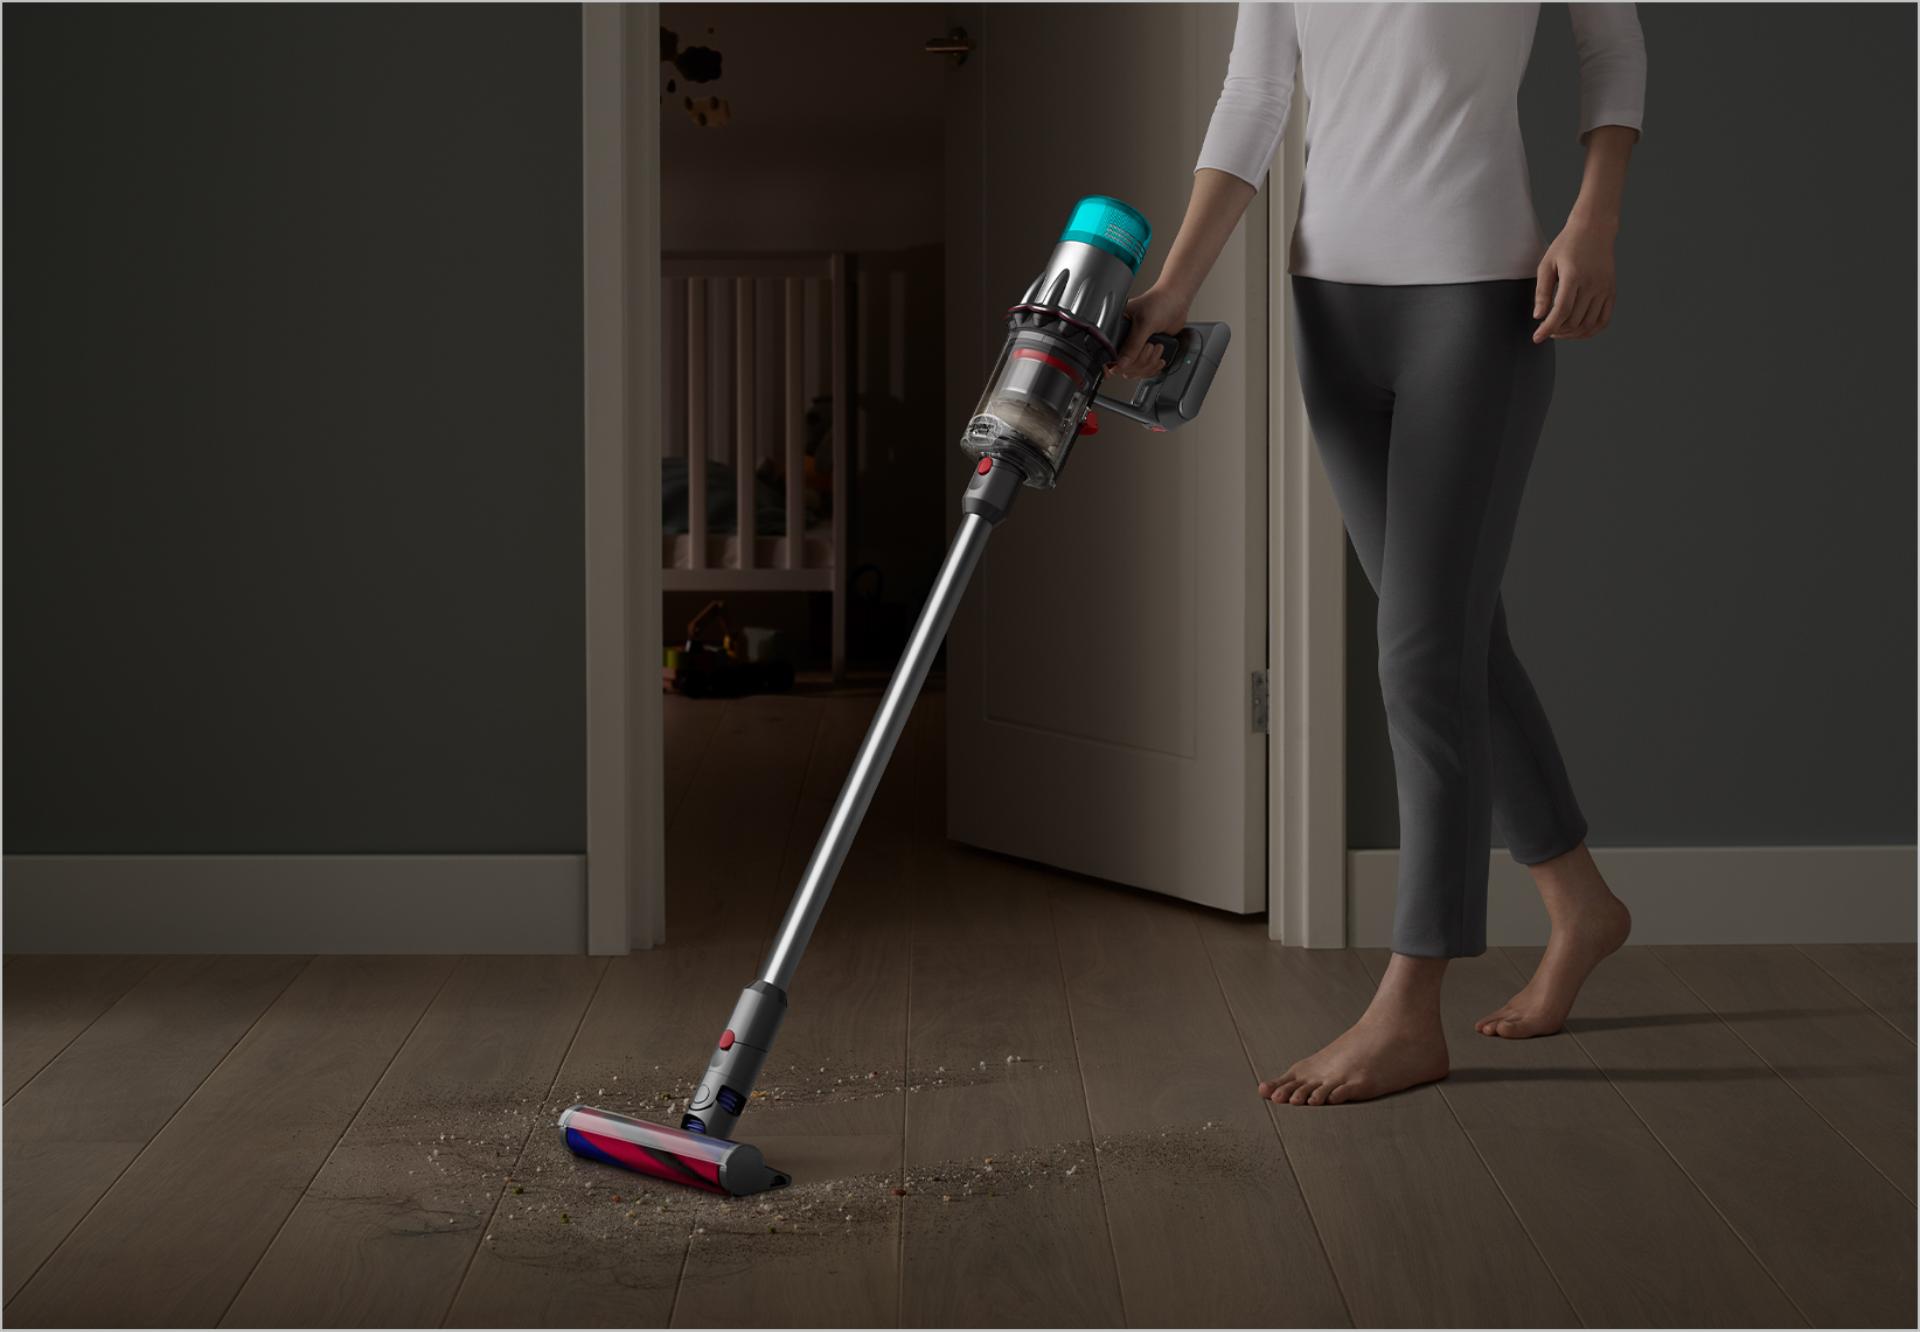 Dyson Digital Slim™ vacuum cleaning a hard floor by a bedroom door.